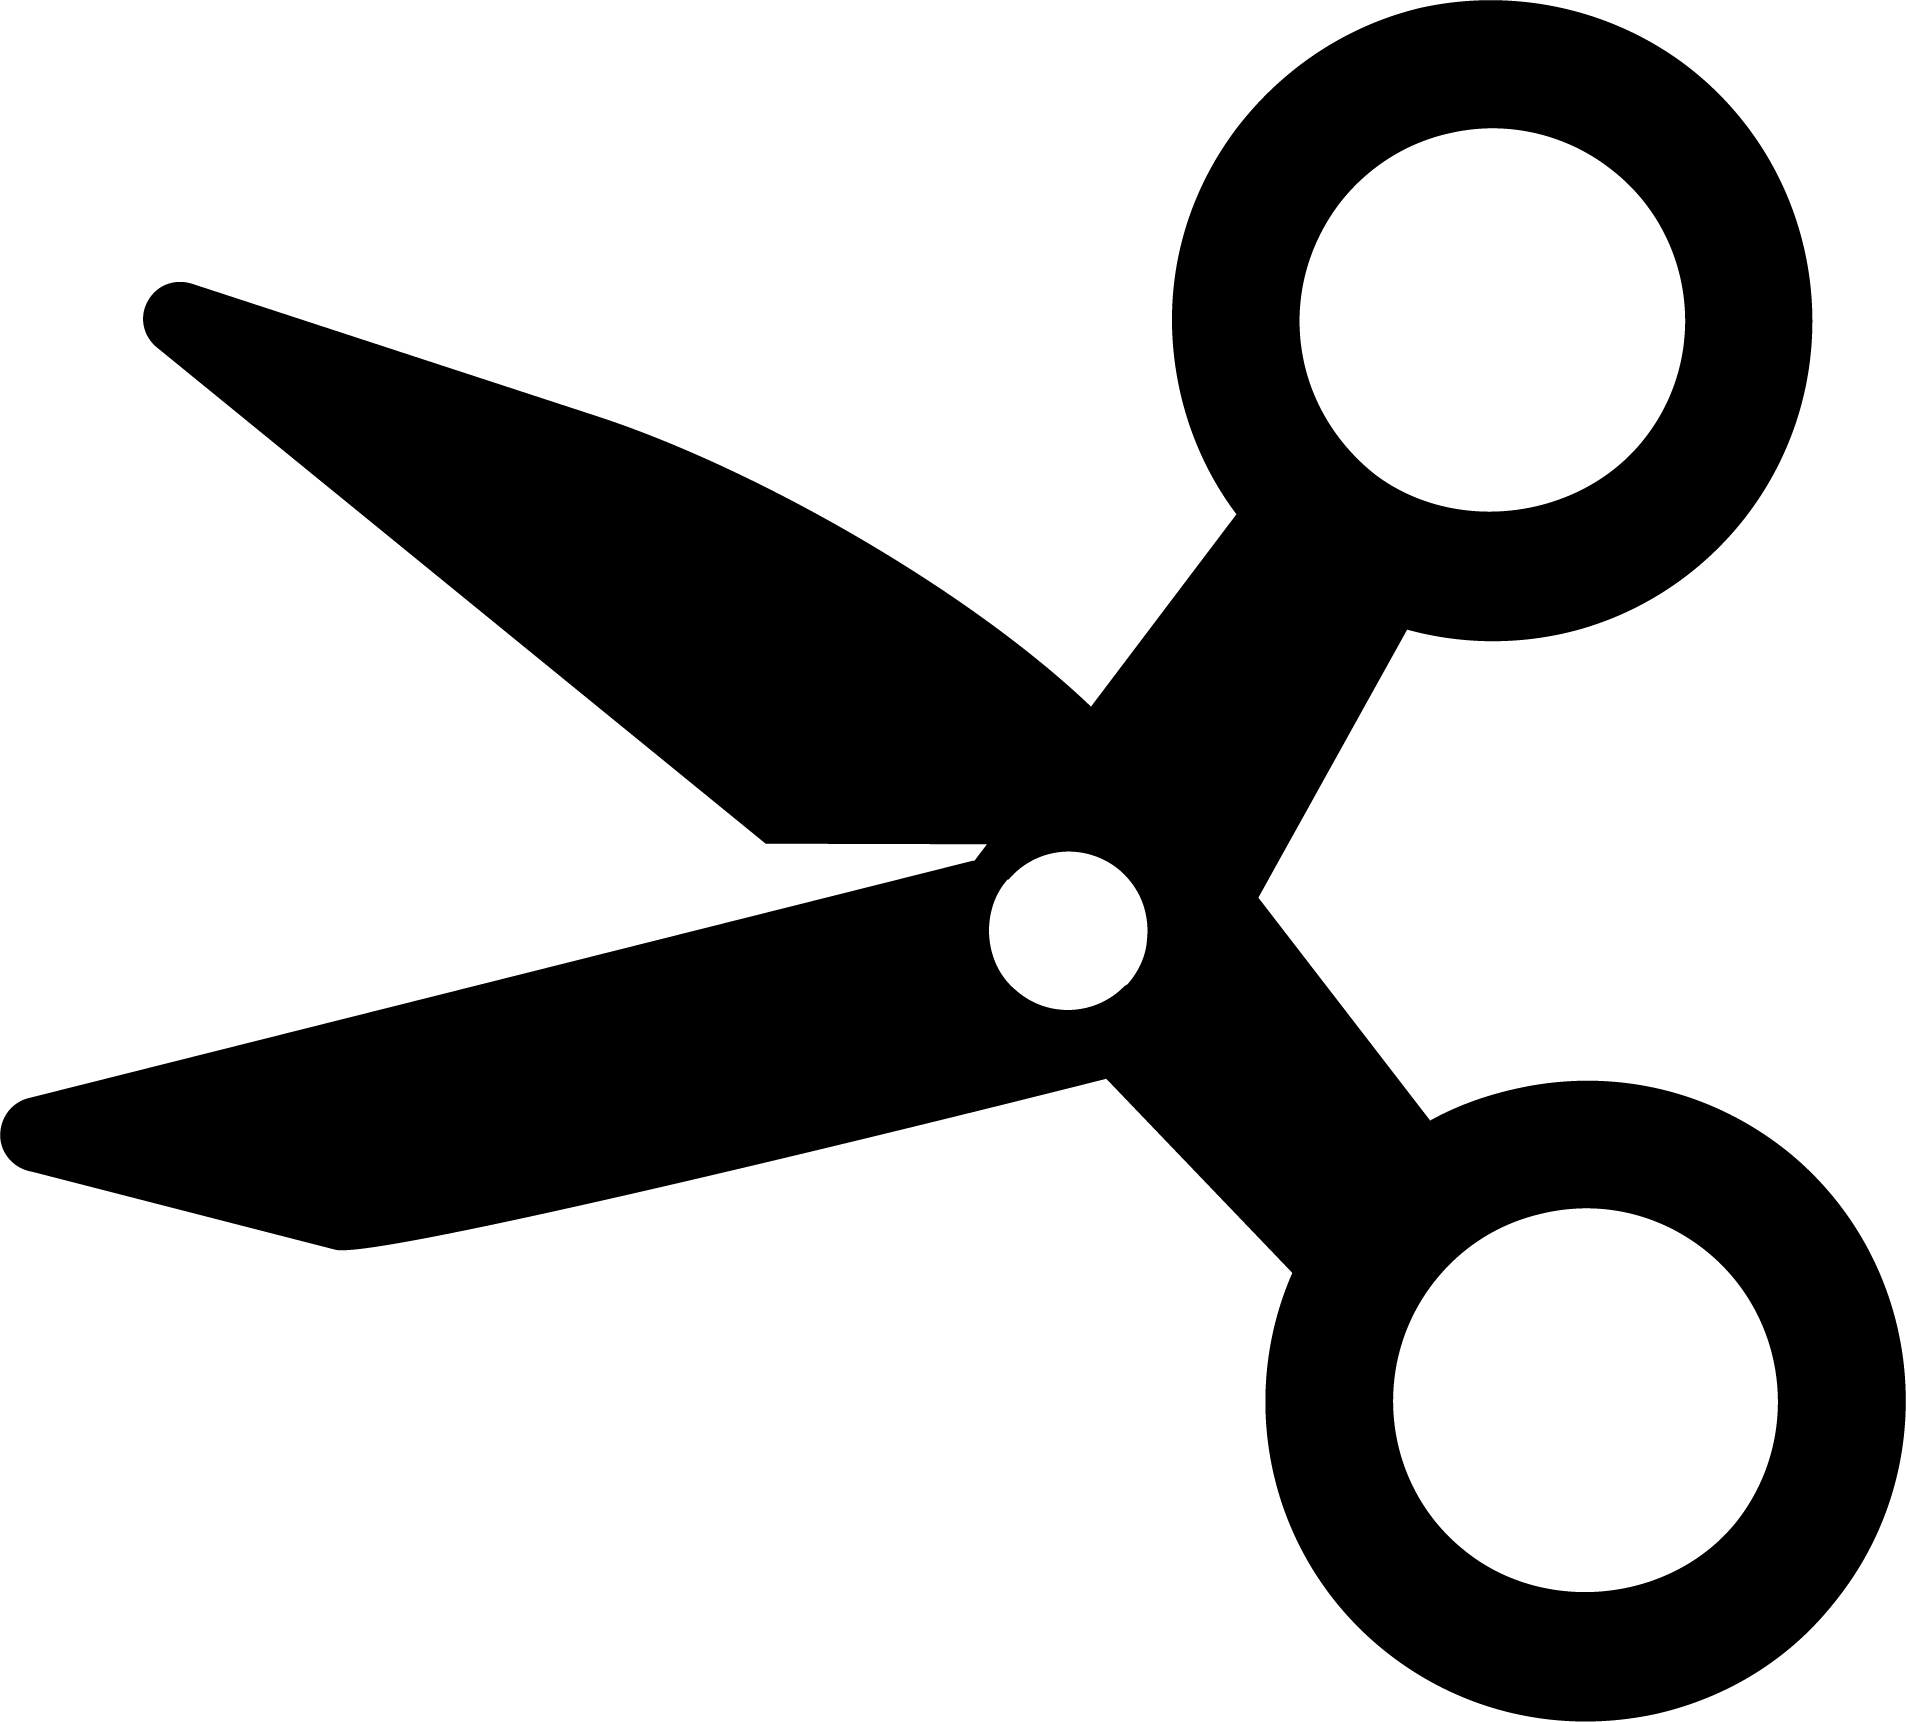 Scissors Icon PNG Image